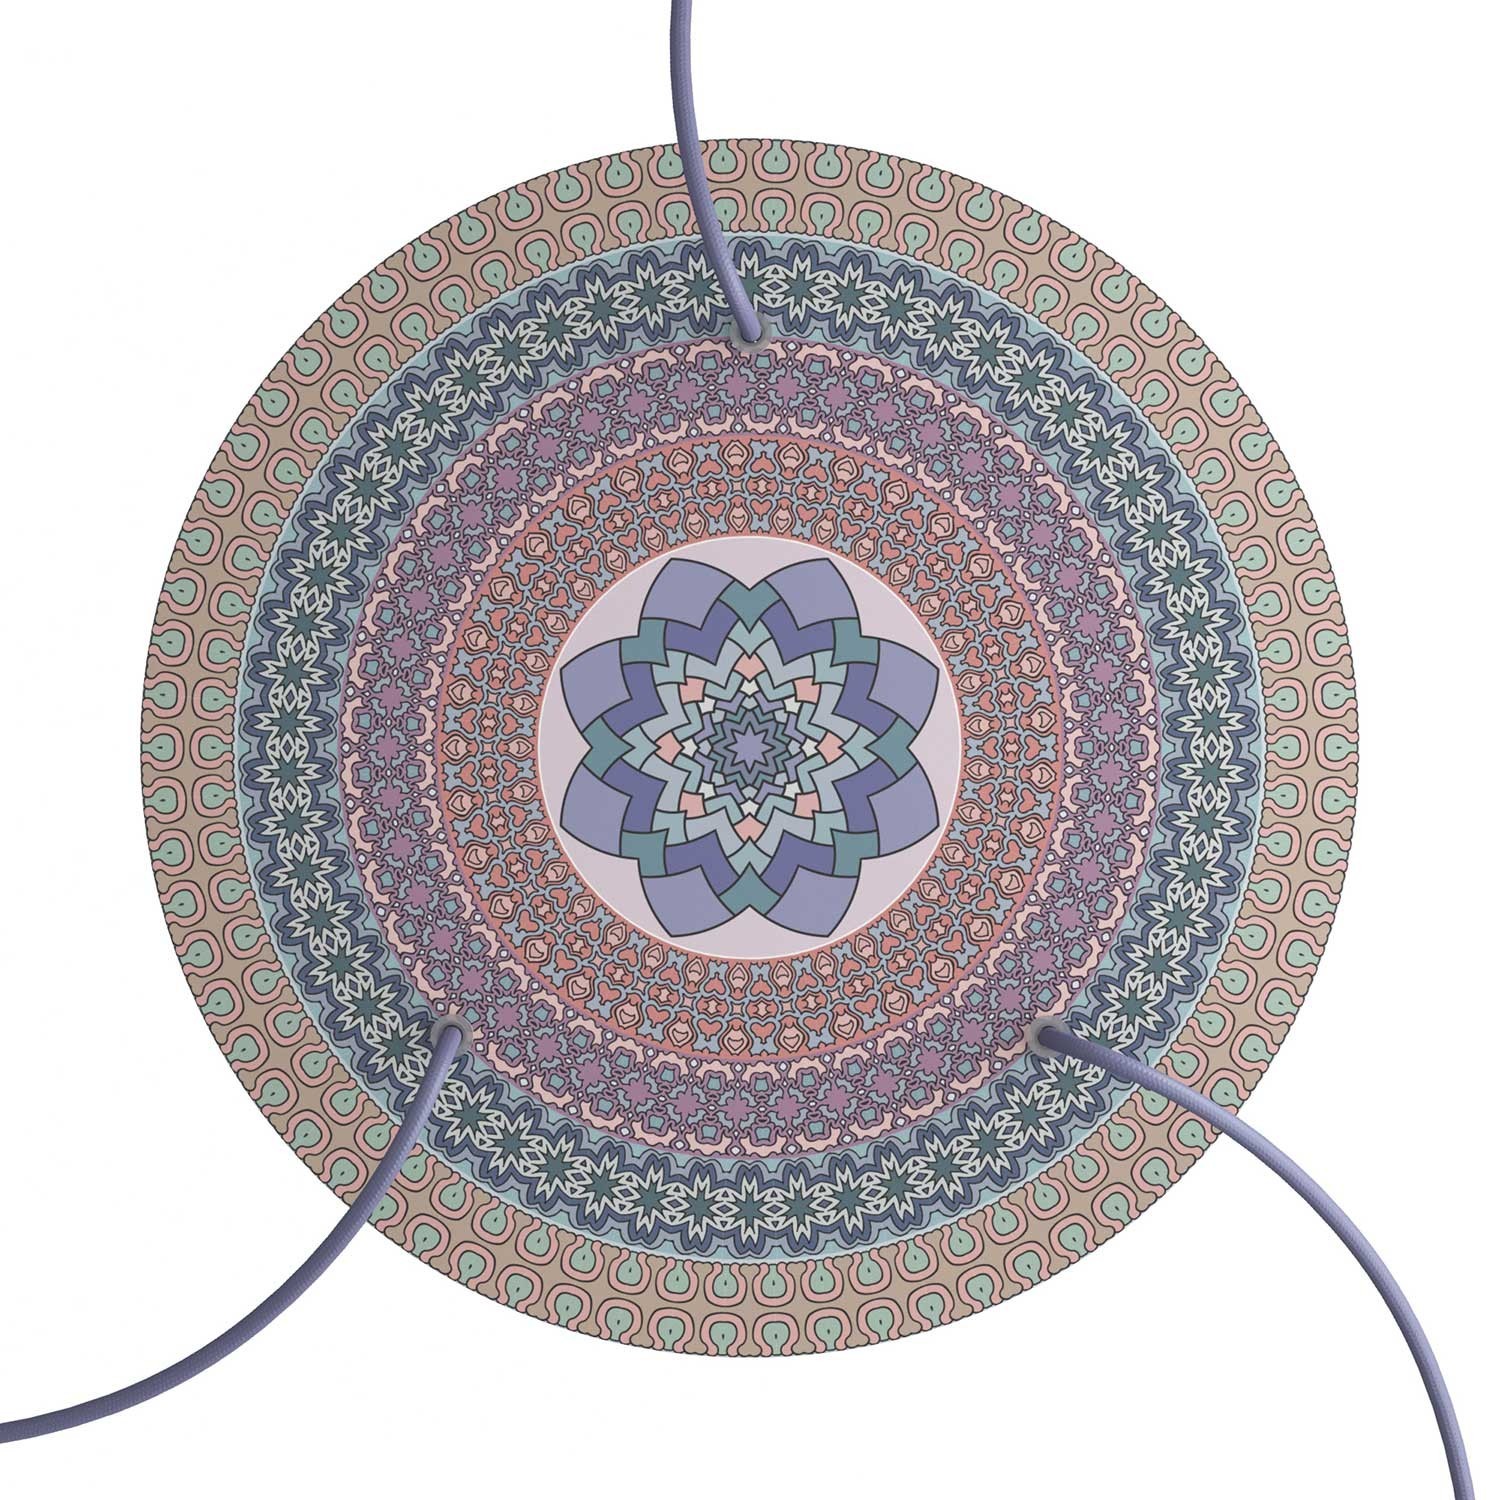 Velika okrugla dekoracija za stropnu rozetu 400 mm - Rose-One sistem s 3 rupe i 4 bočne rupe - PROMO